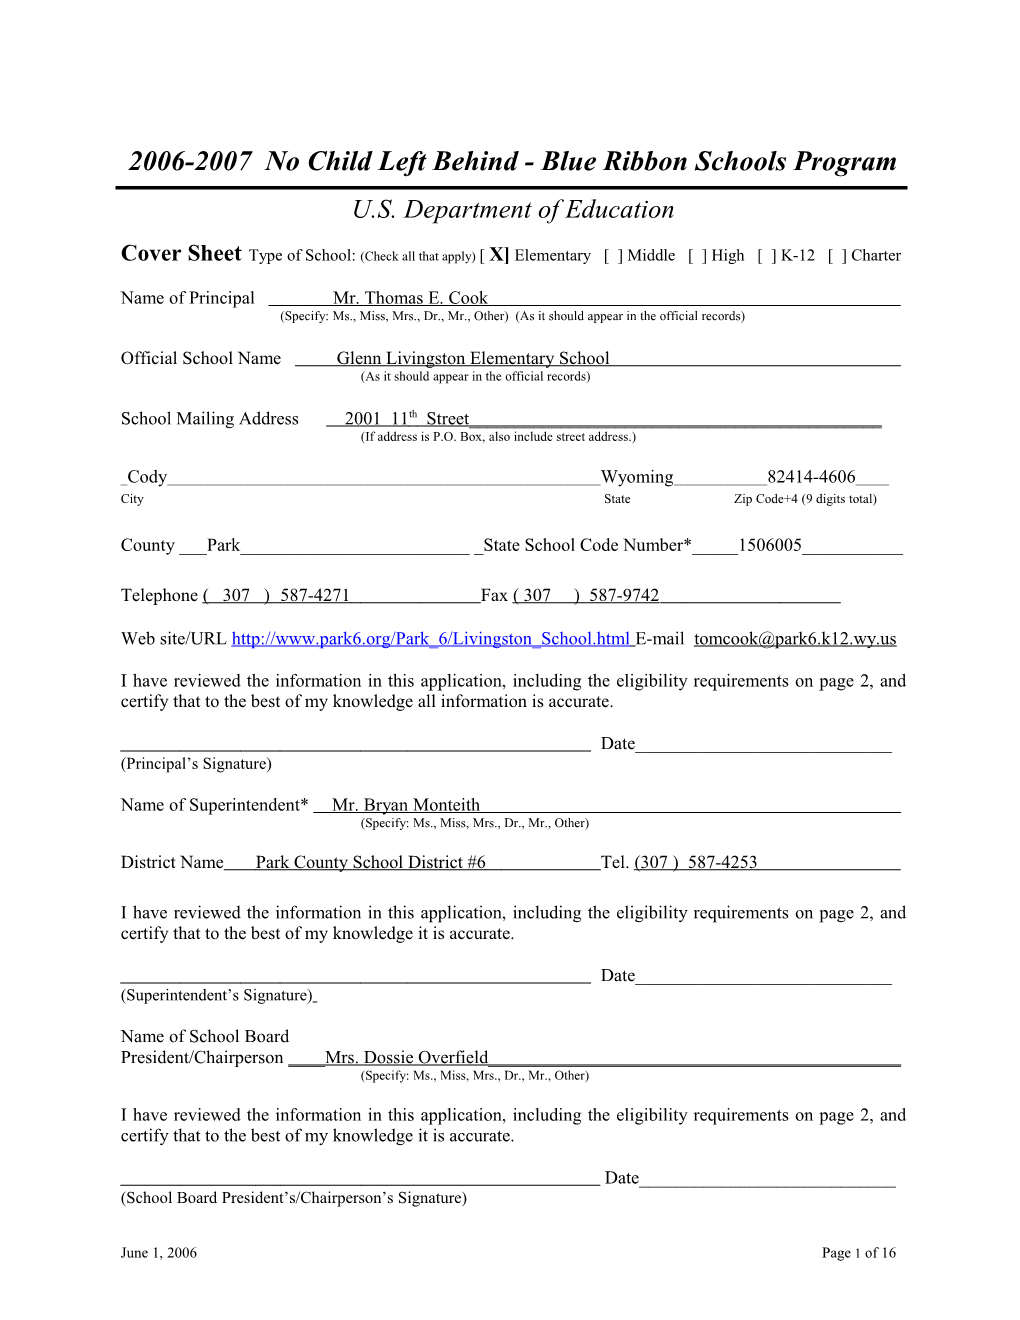 Application: 2006-2007, No Child Left Behind - Blue Ribbon Schools Program (MS Word) s18